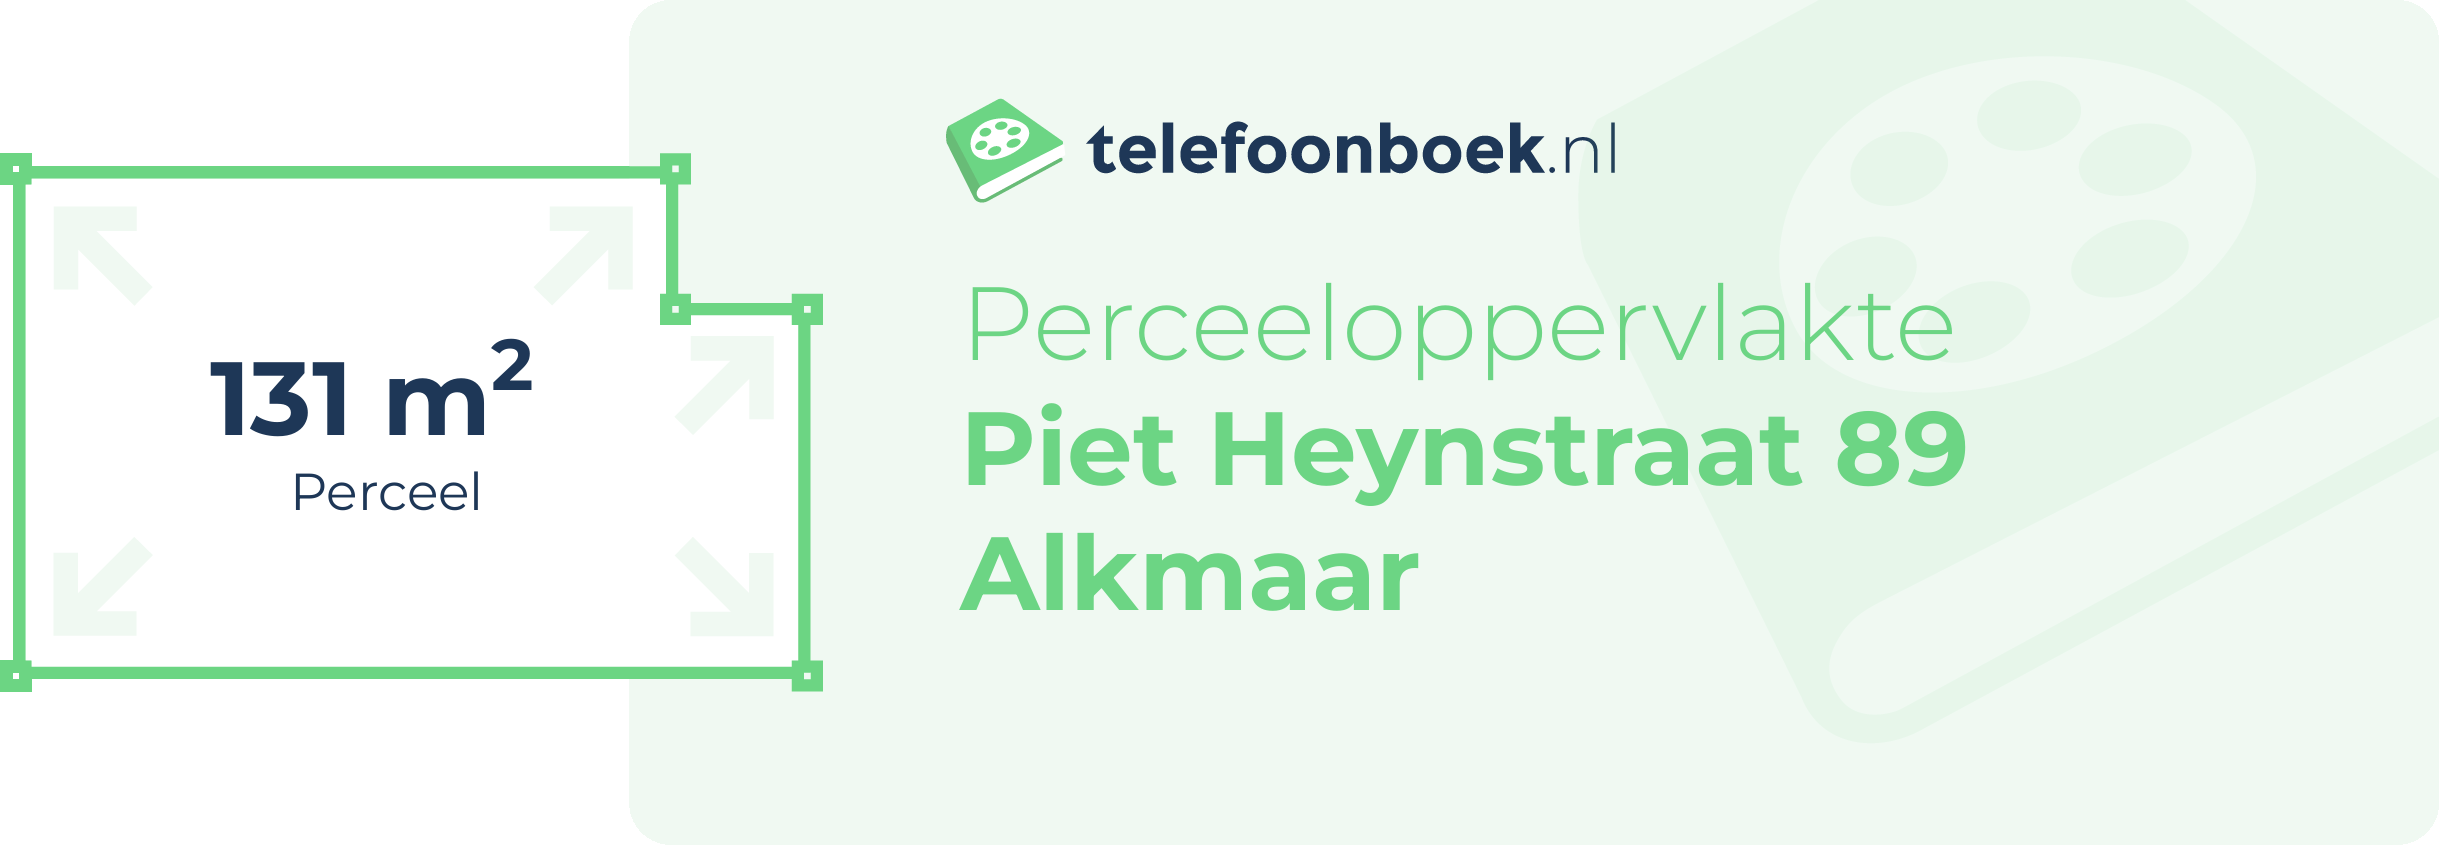 Perceeloppervlakte Piet Heynstraat 89 Alkmaar